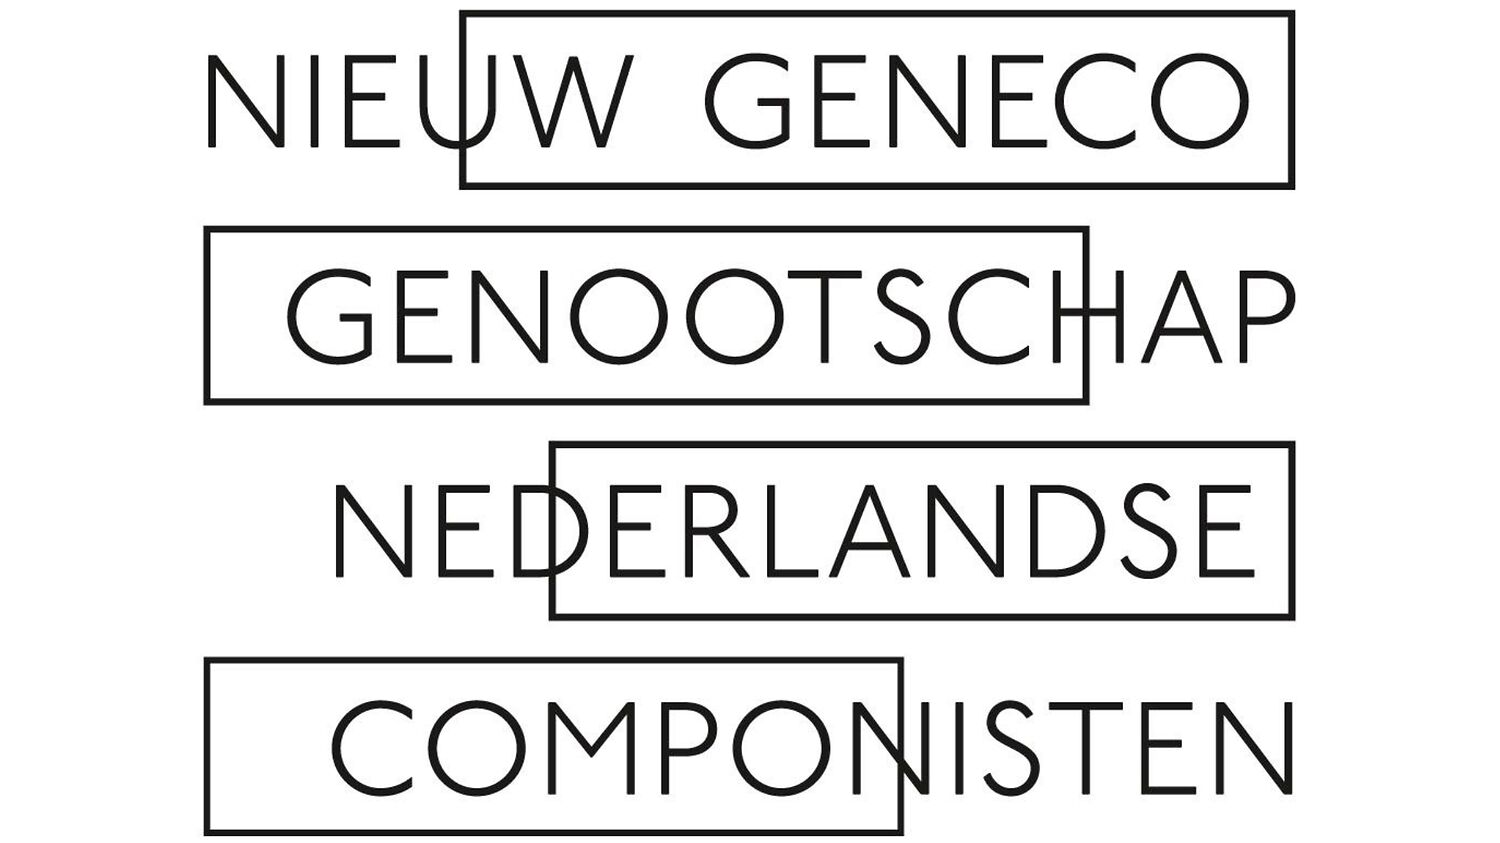 Nominees announced for the Nieuw Geneco Fair Practice Award